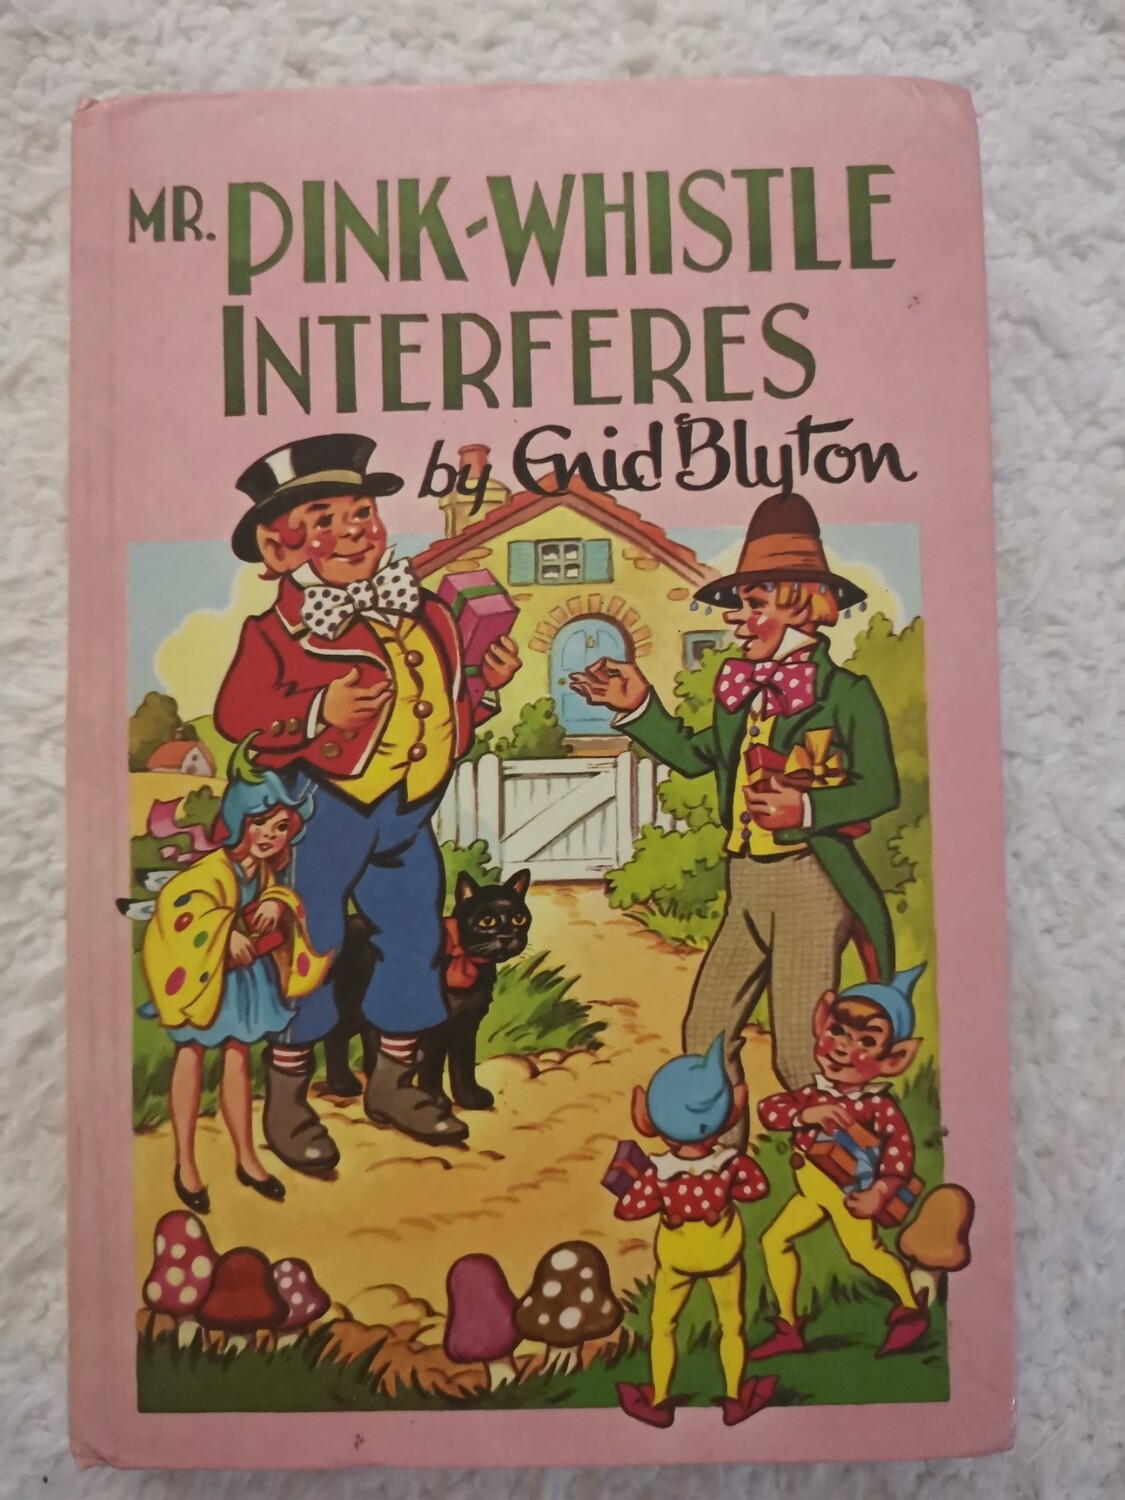 Mr Pink-whistle interferes, Enid Blyton